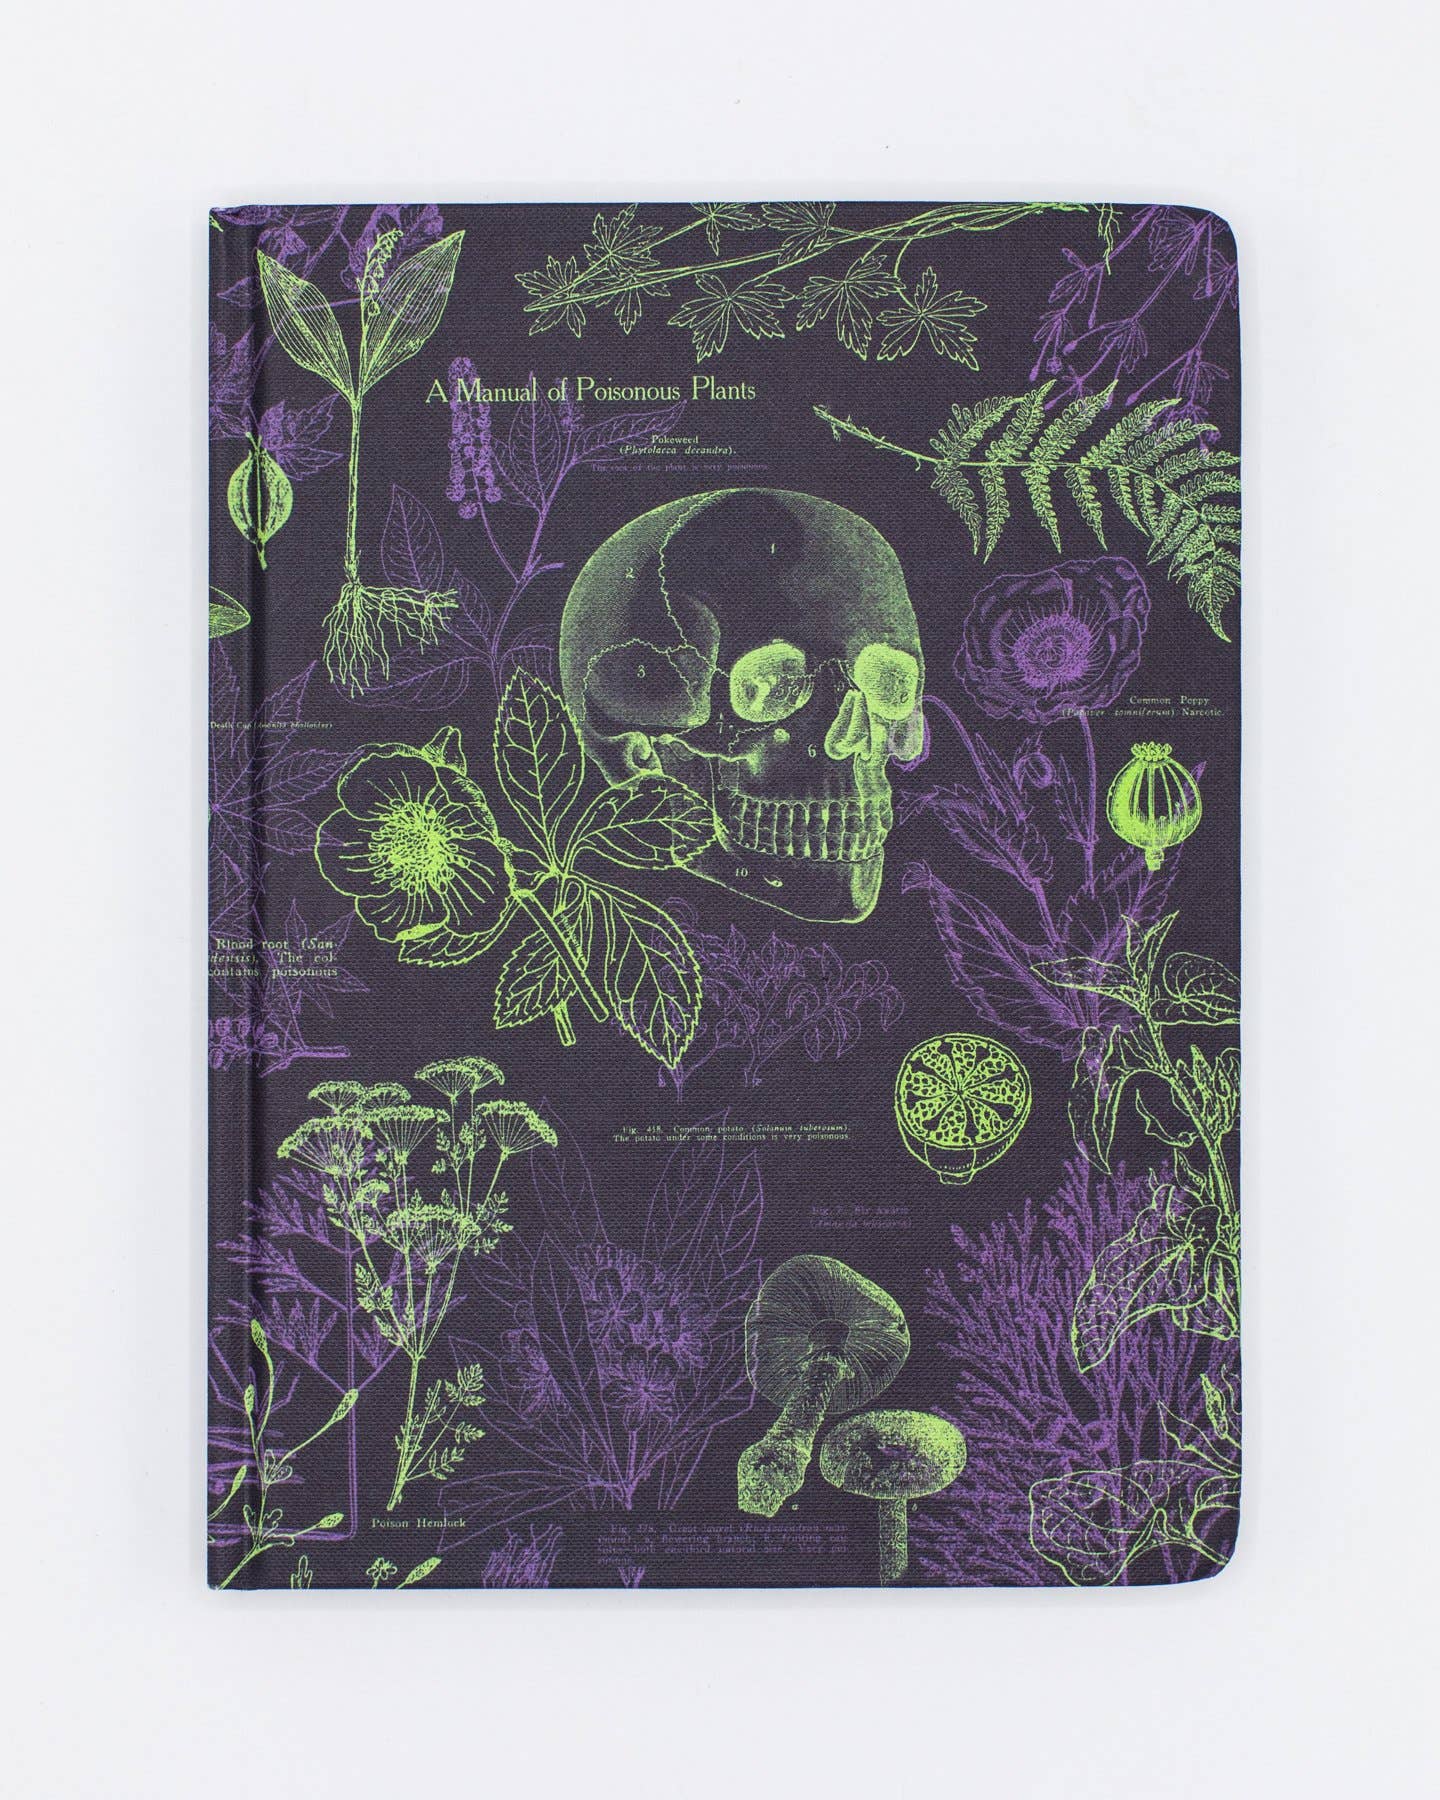 Journal (Hardcover) - Poisonous Plants